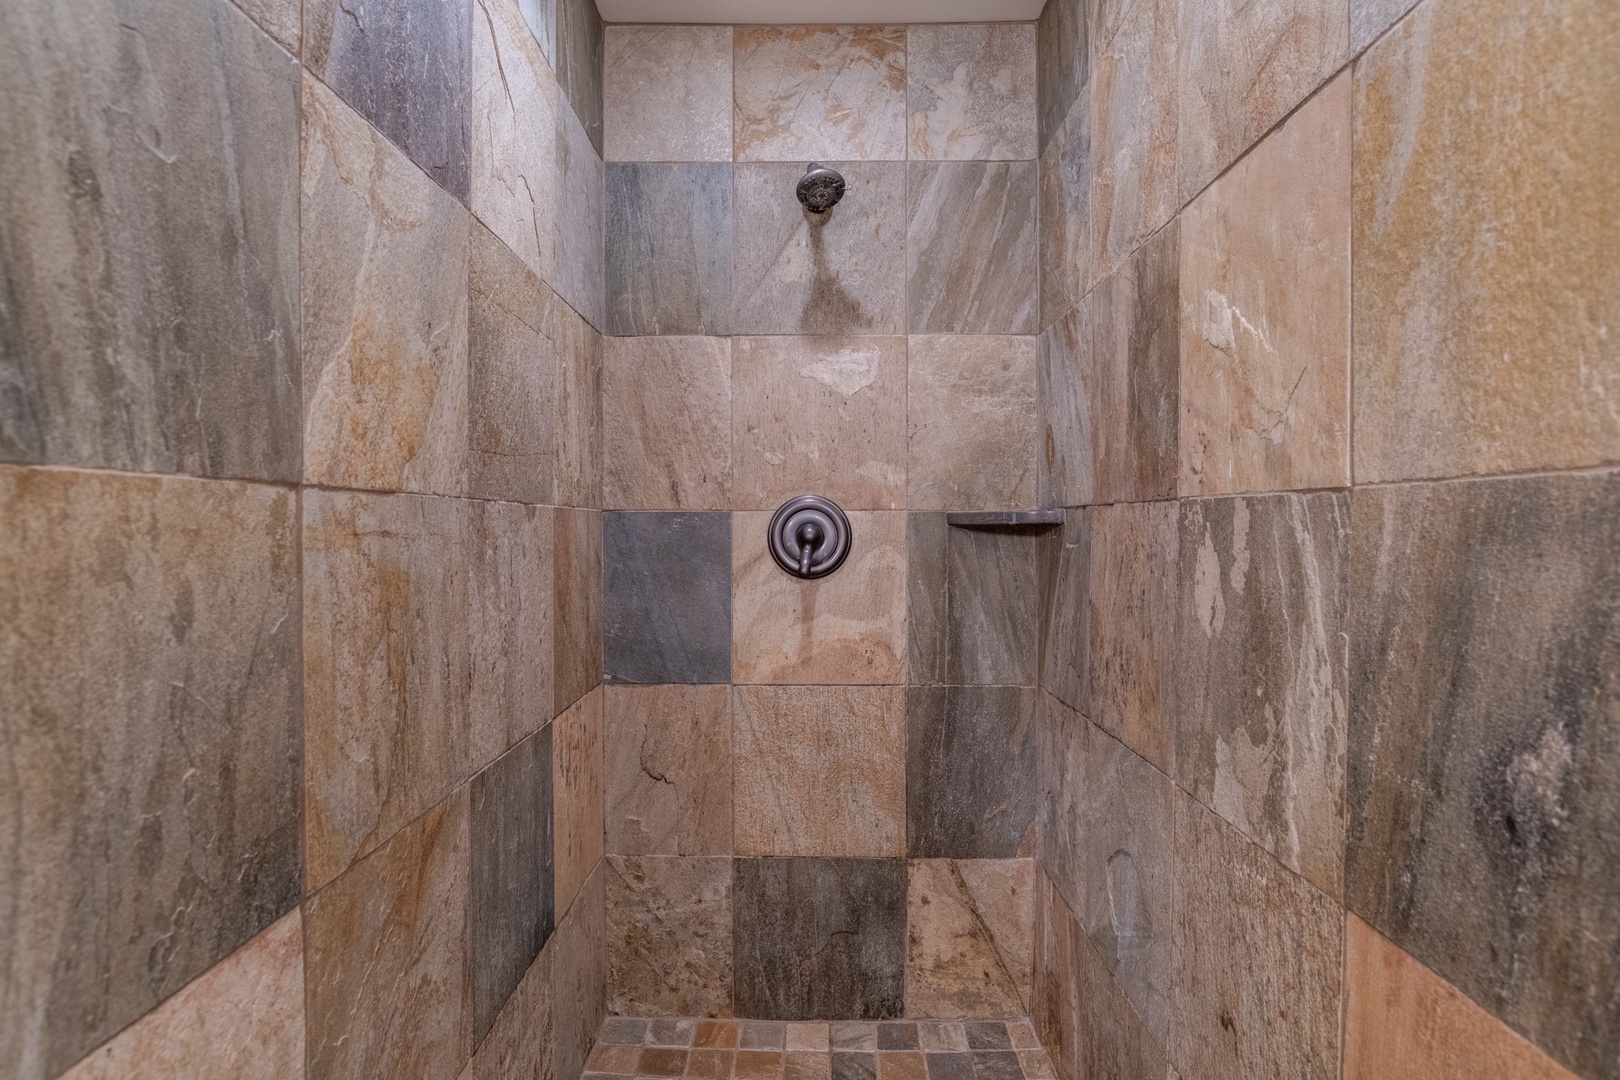 Lahaina Vacation Rentals, Aina Nalu D103 - Beautifully tiled walk-in shower